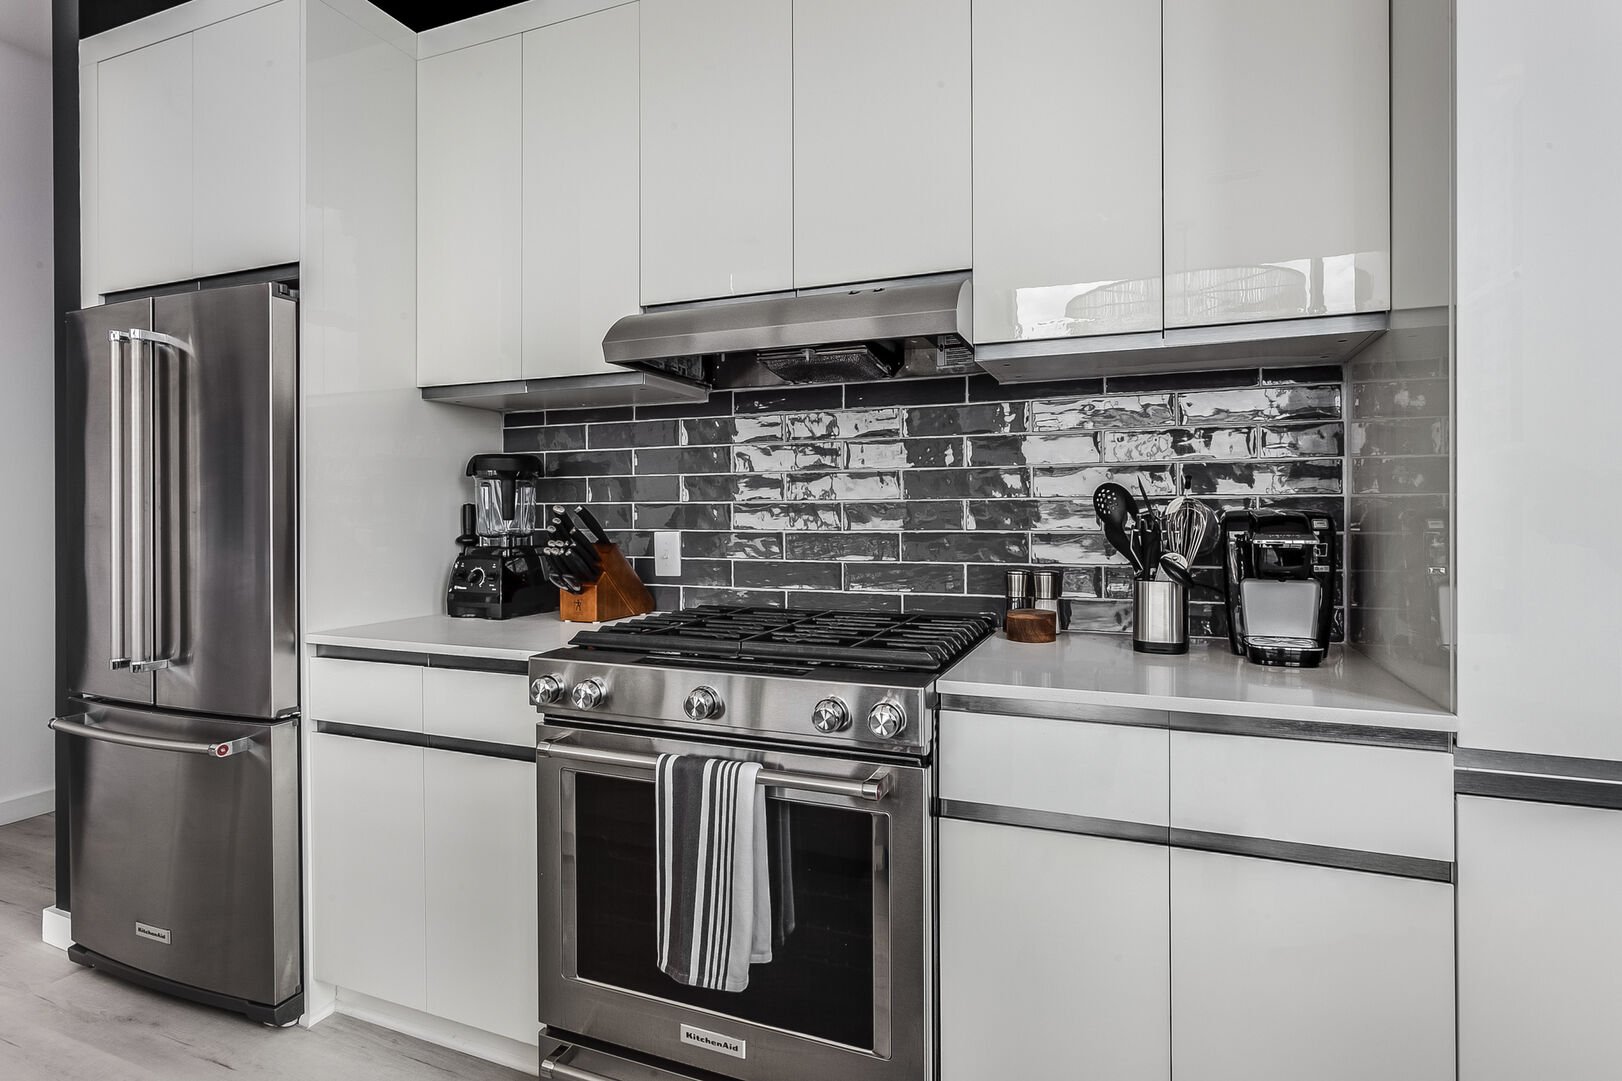 Stunning Kitchen Features Stainless Steel Appliances.